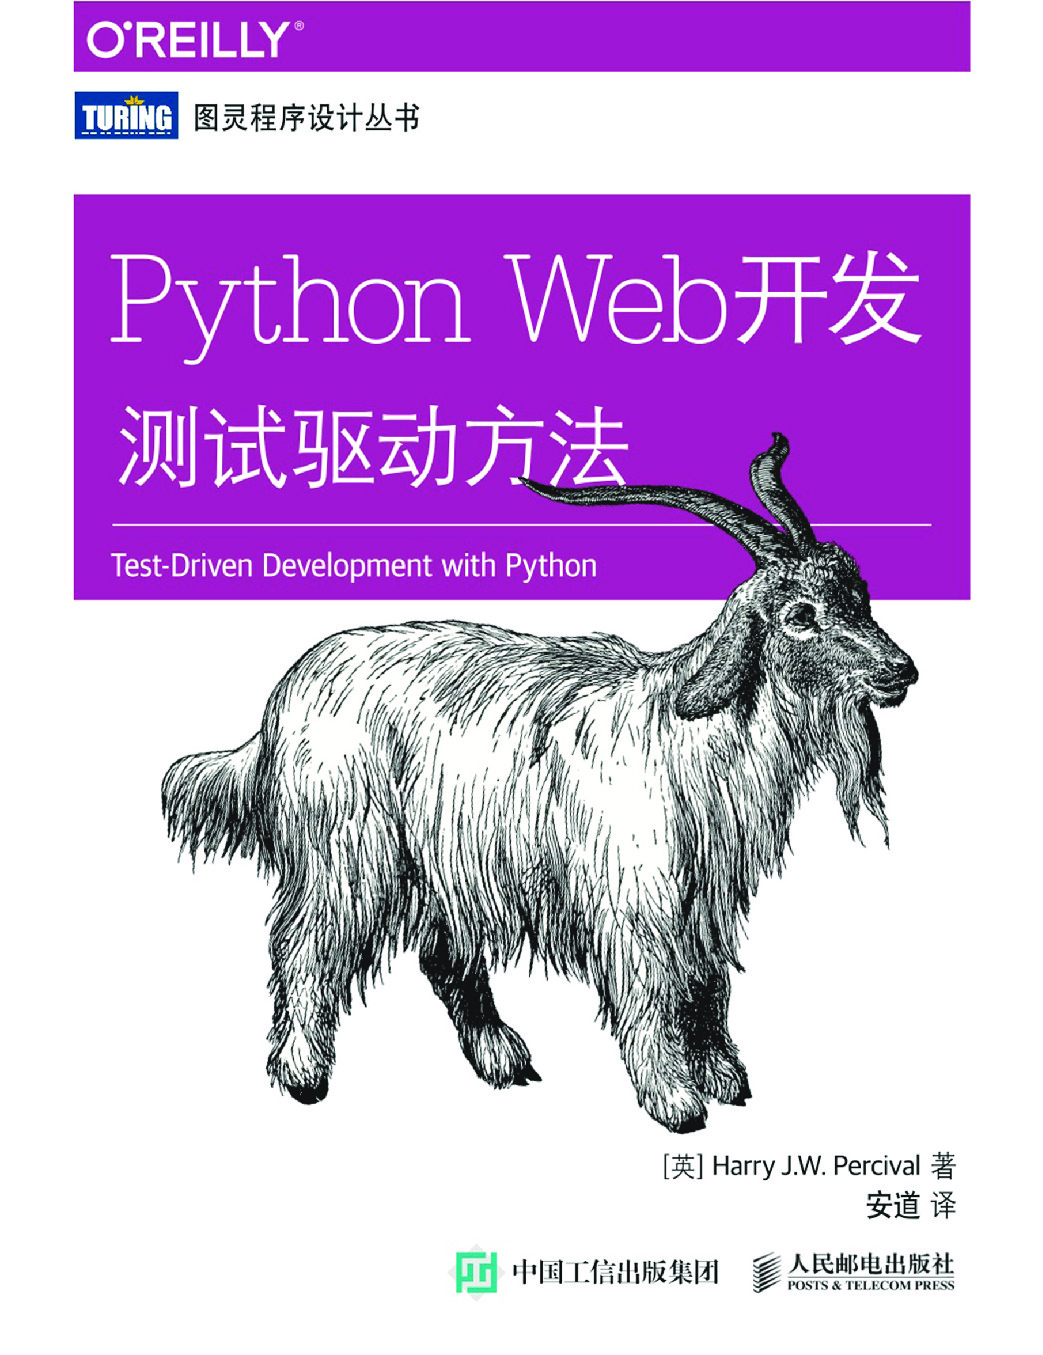 Python+Web开发：测试驱动方法